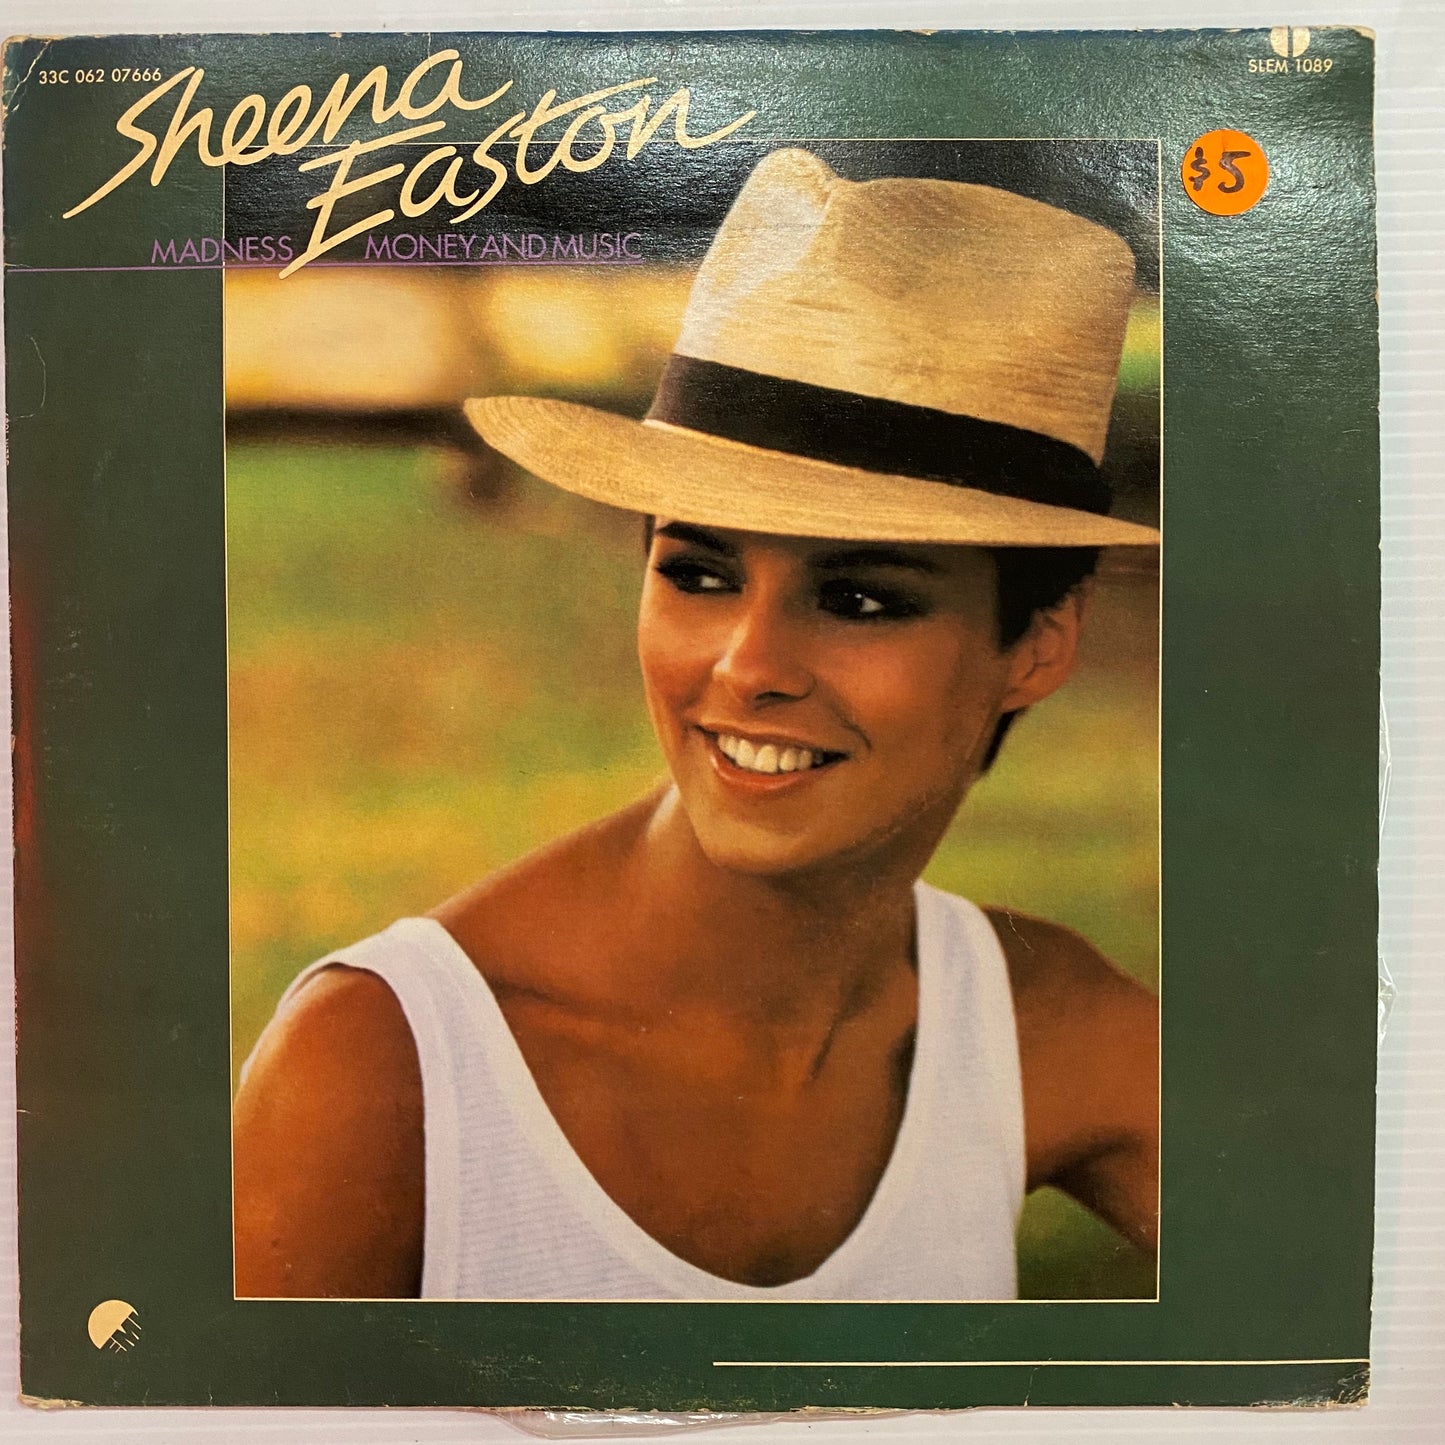 Sheena Easton - Madness, Money, and Music (Vinyl)